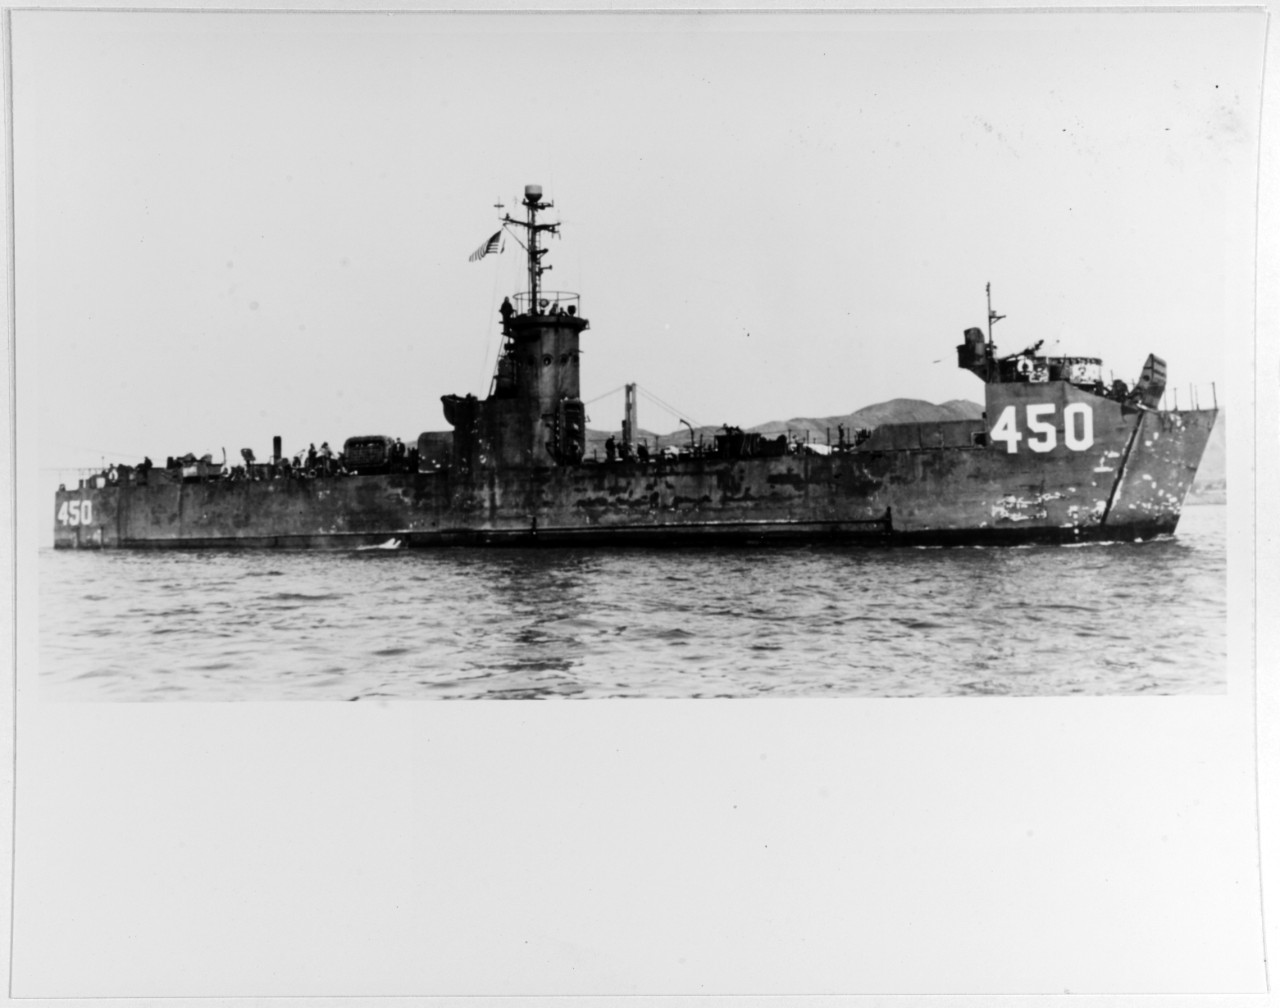 USS LSM-450